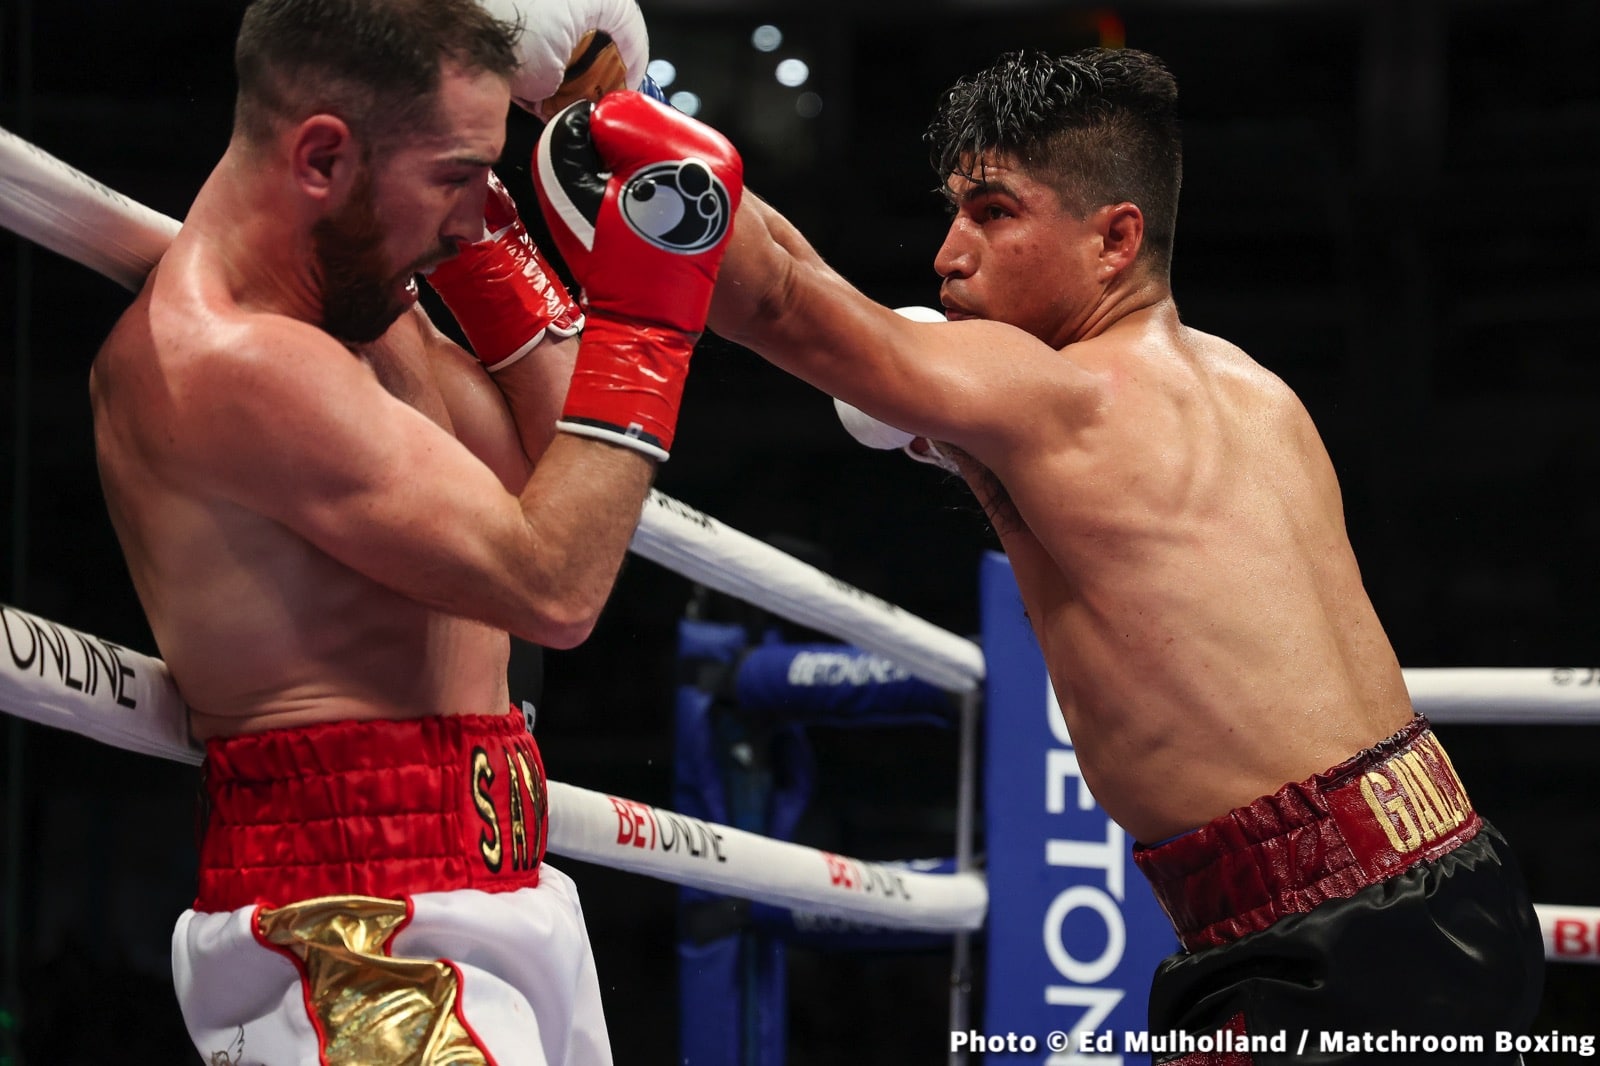 Mikey Garcia boxing image / photo